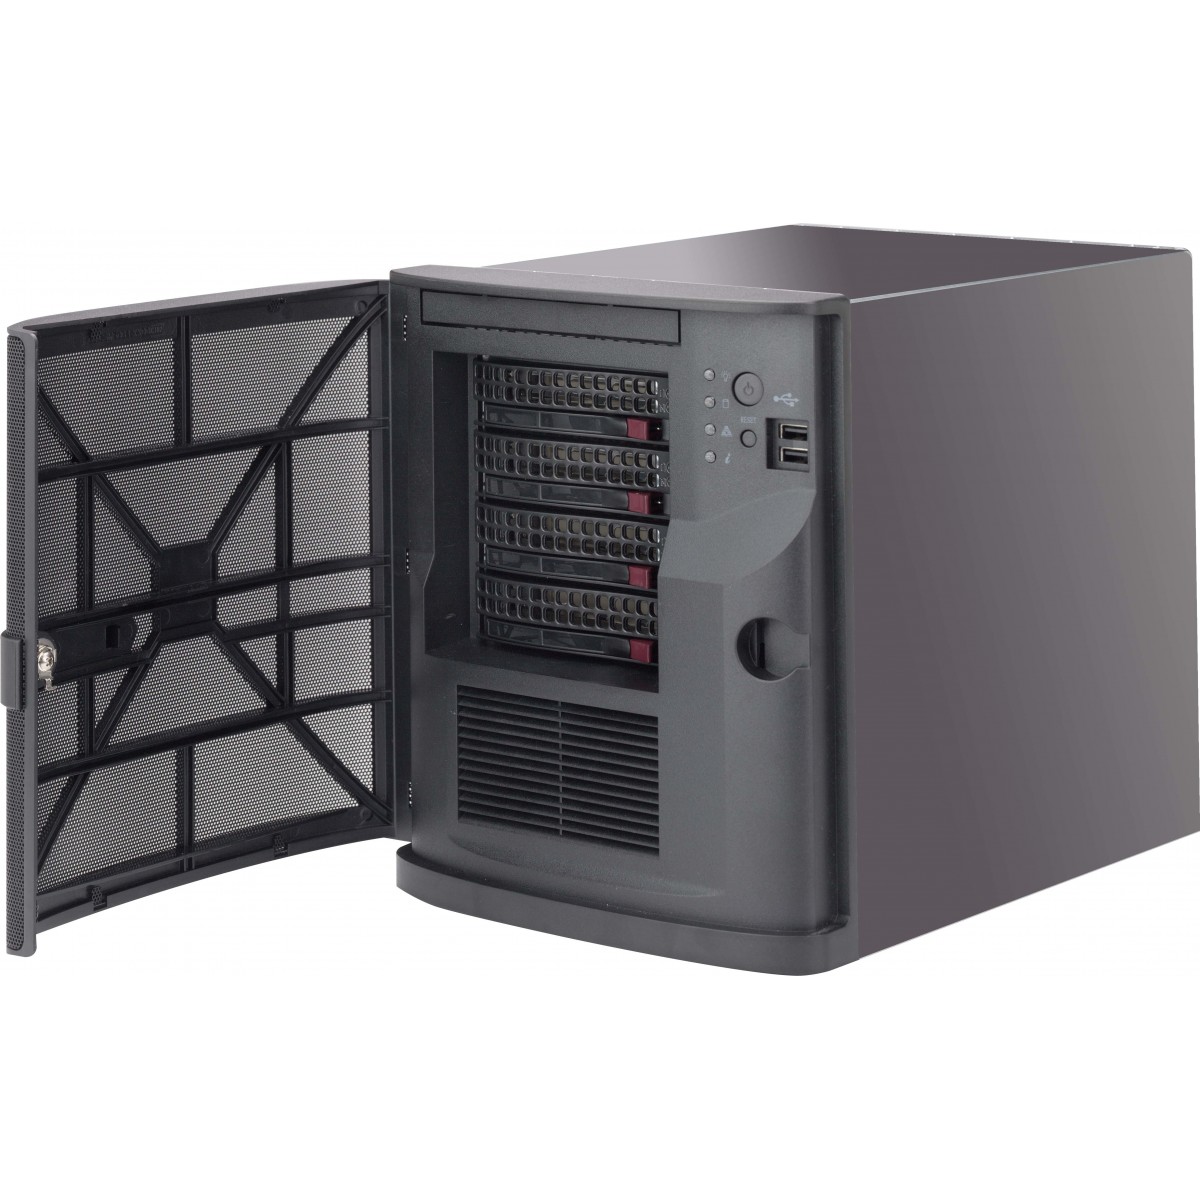 SUPERMICRO CSE-721TQ-250B Black Mini-Tower Server Case 250W Flex ATX Multi-output Bronze Power Supply